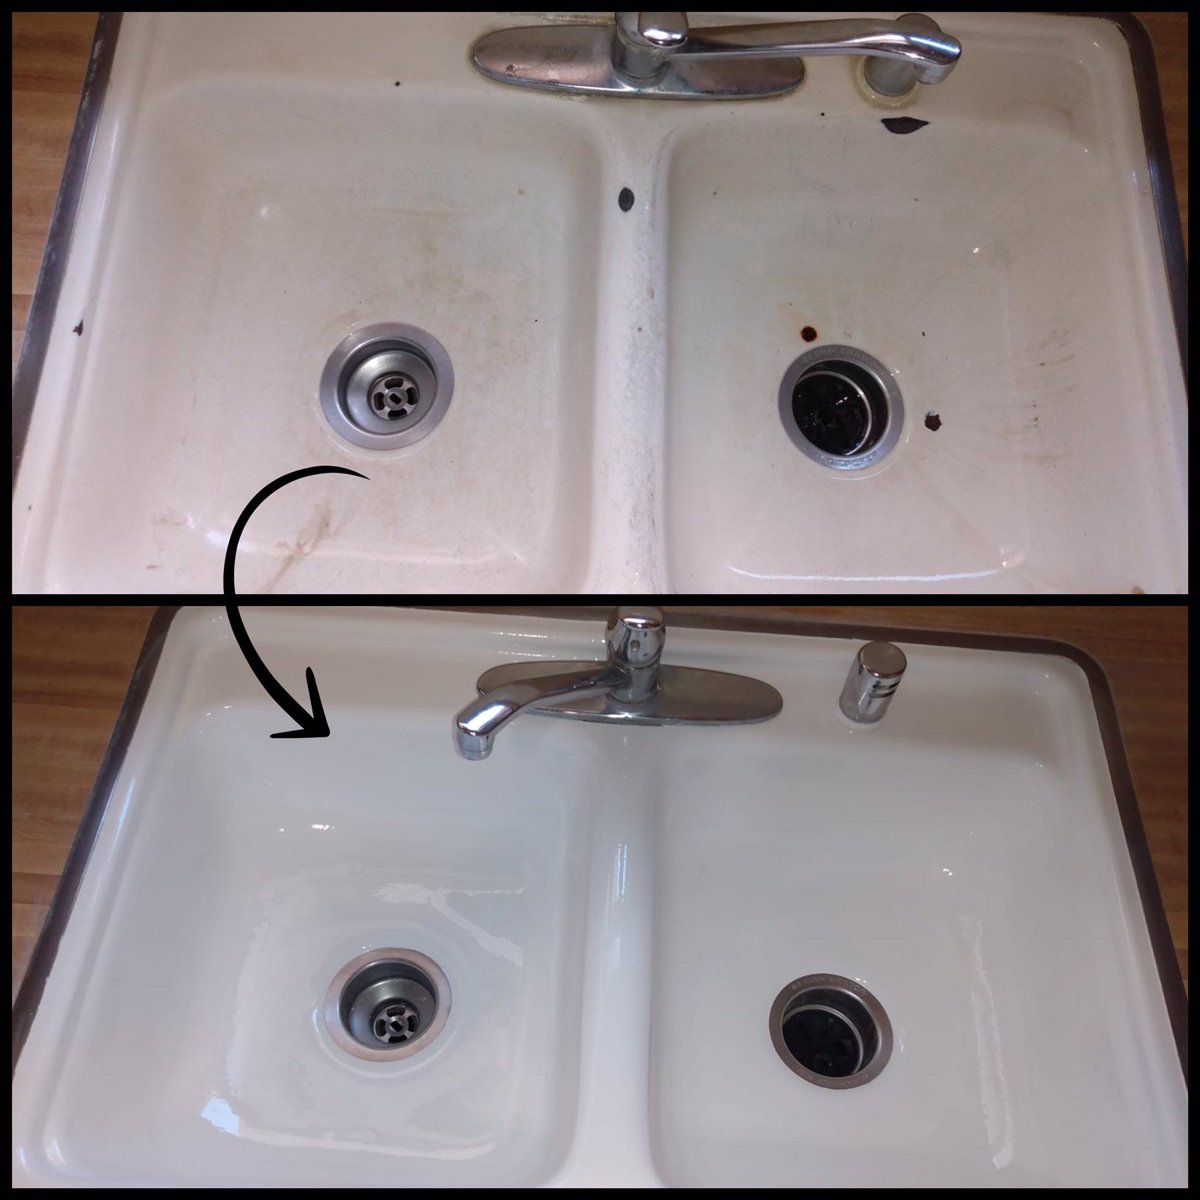 Before & after! 😉

#A1ReglazingInc #LikeNew #Kitchen #Sink #Reglazing #Refinishing #LosAngeles #DoubleSink #Backsplash #Counter